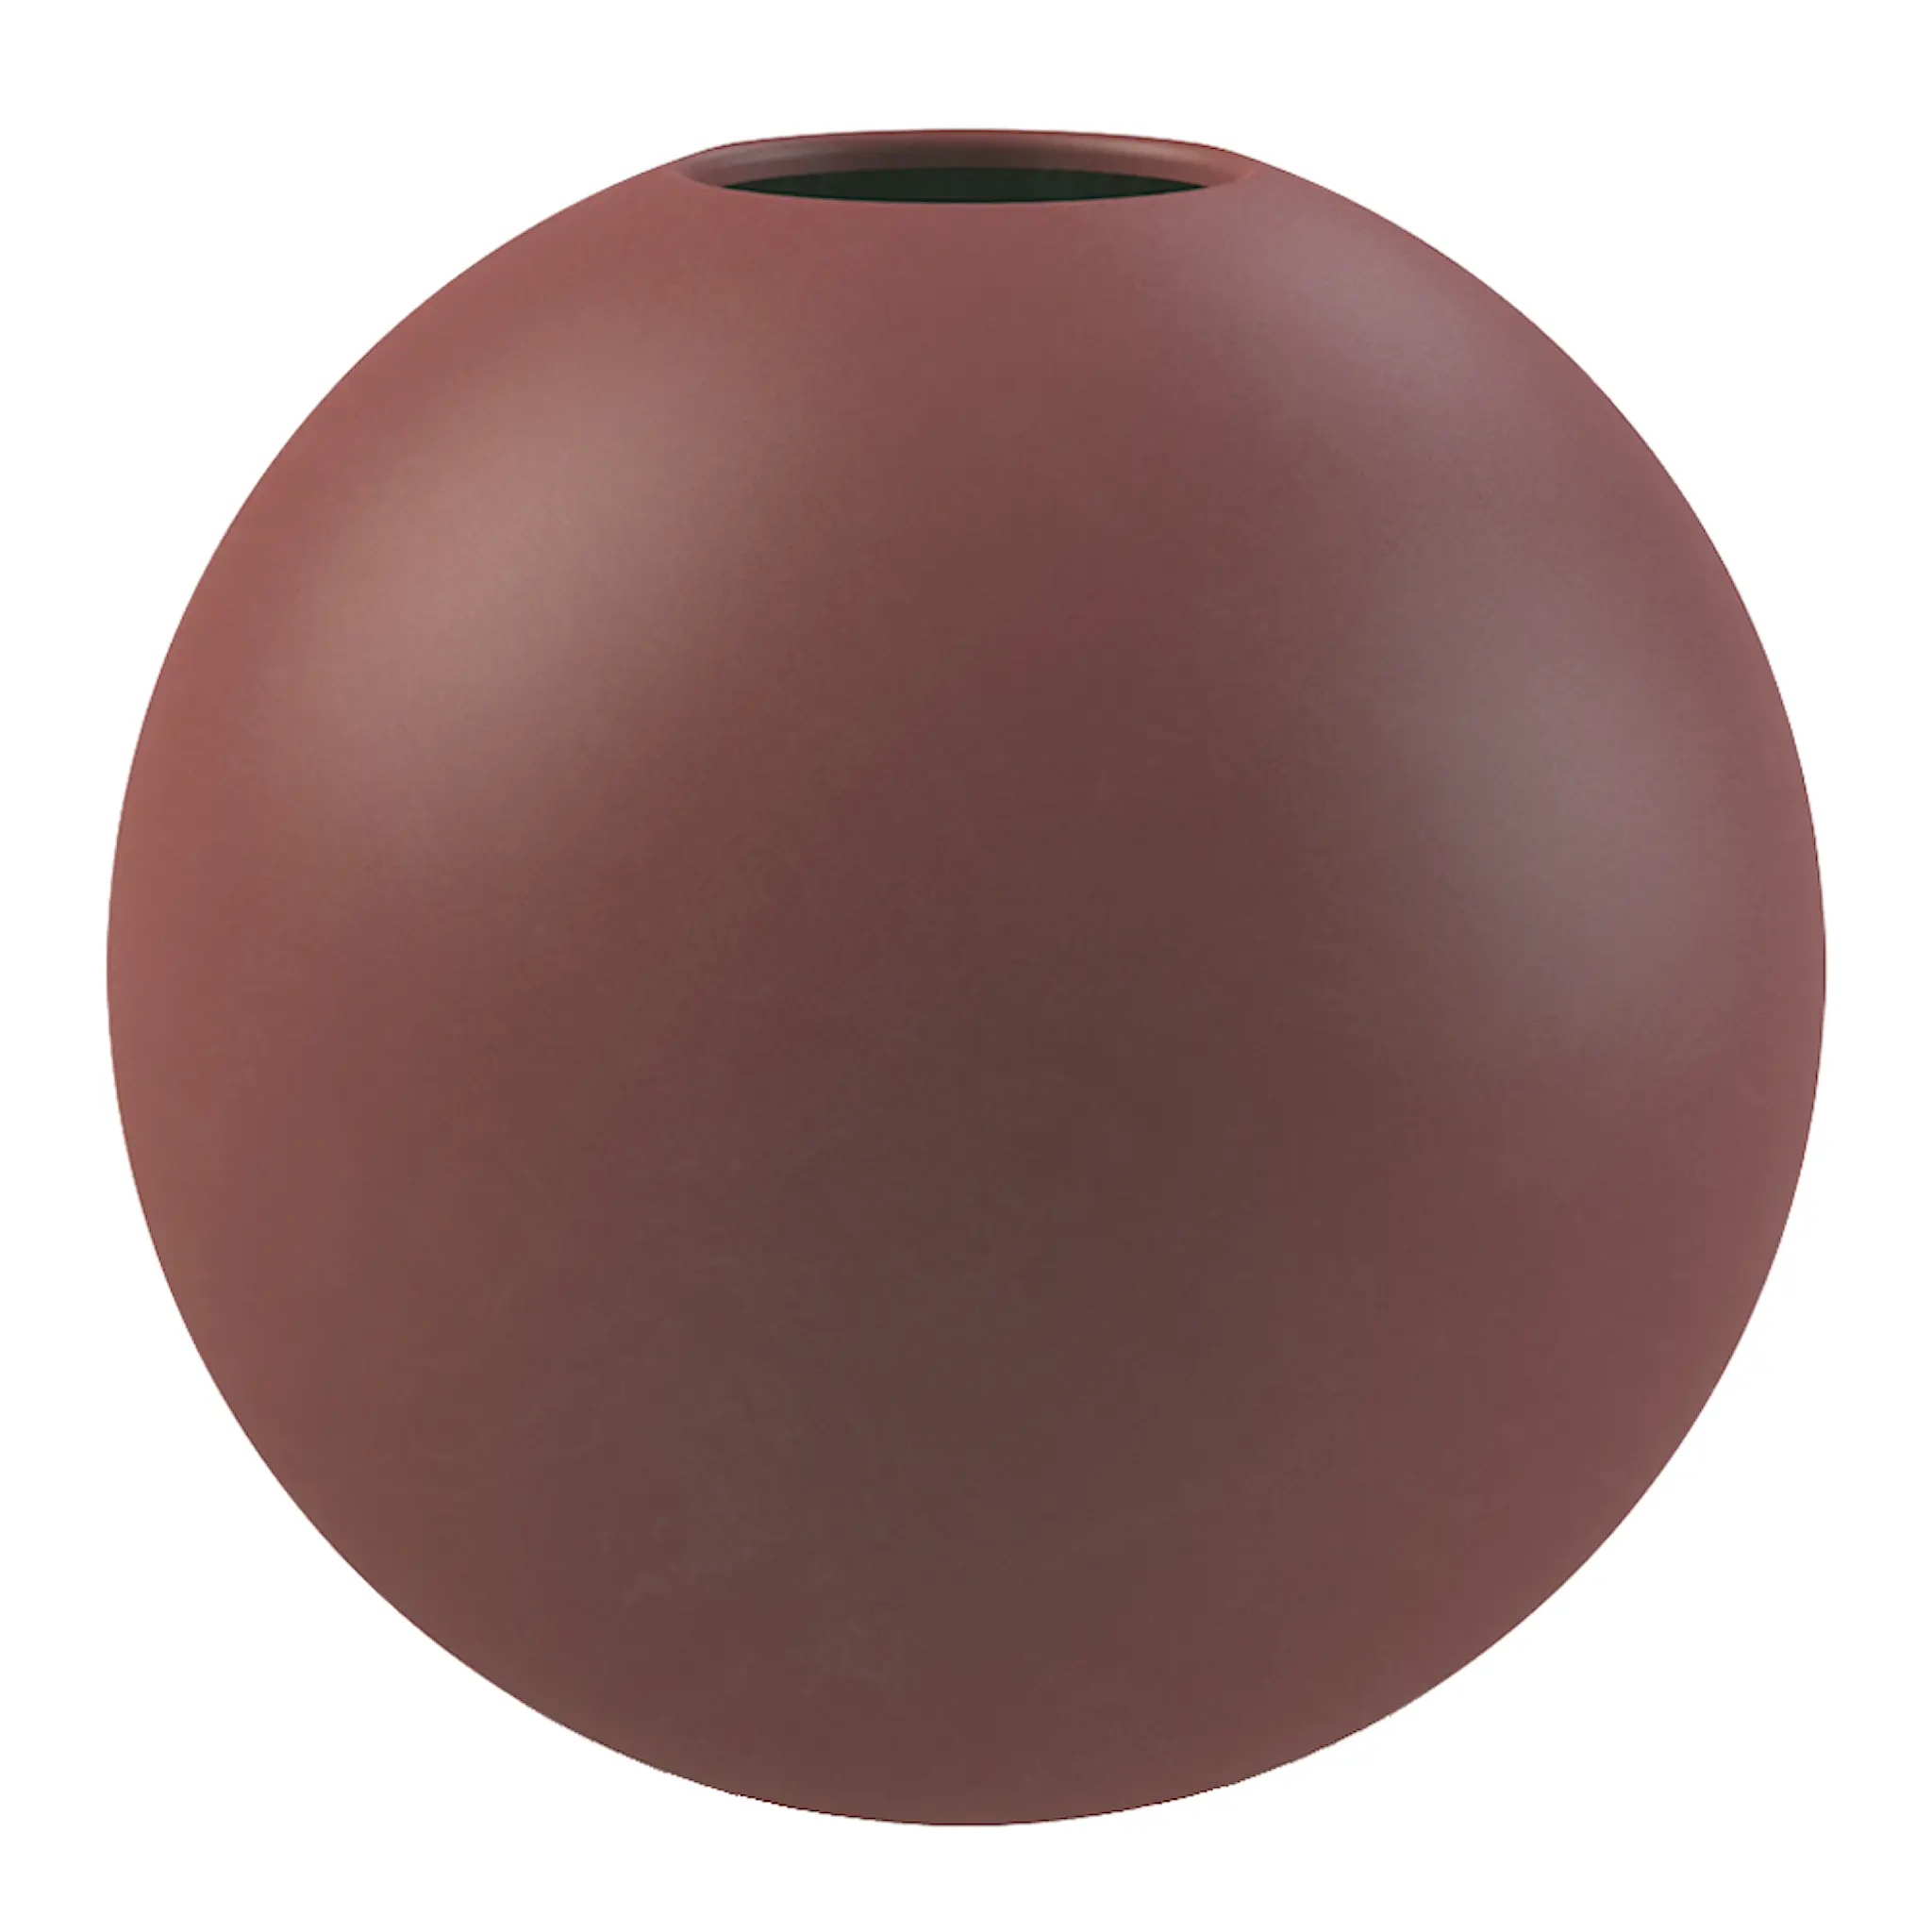 Cooee Ball vase 8 cm plum